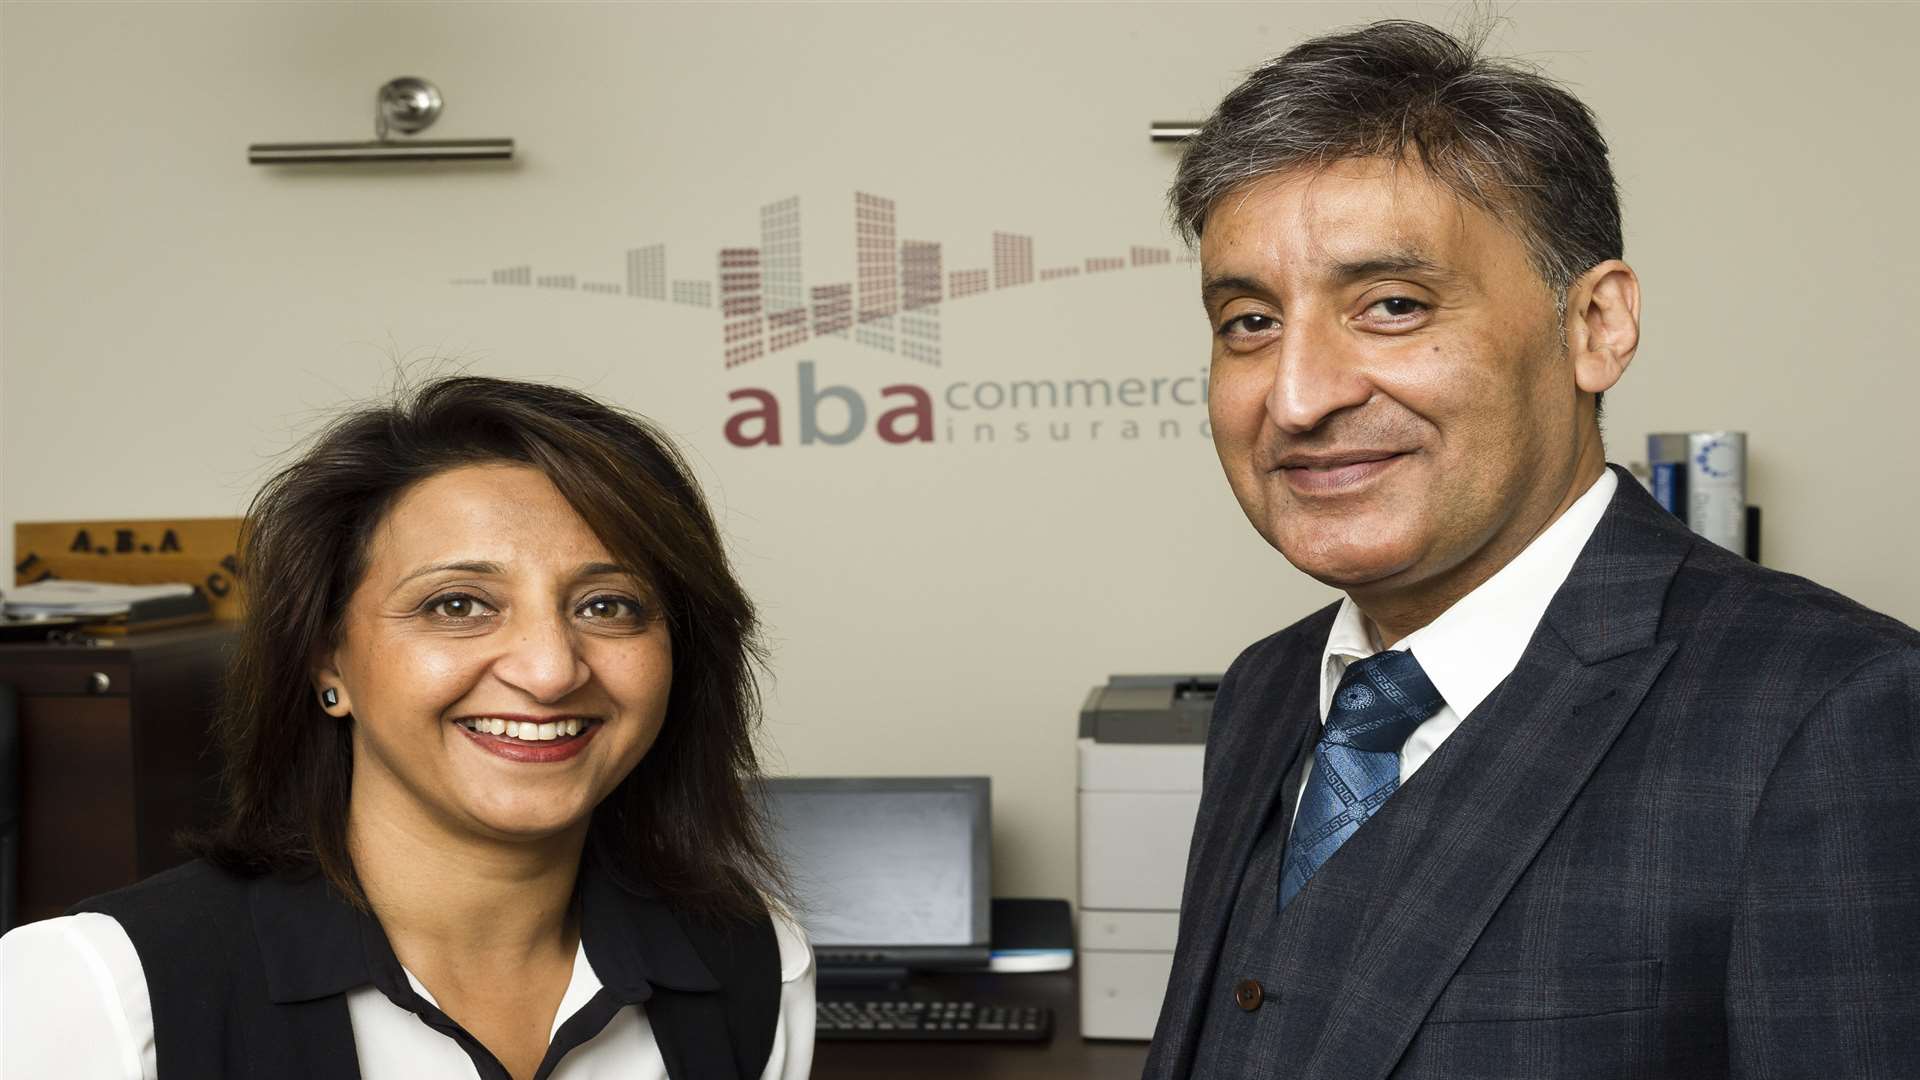 Pam Samrai and Del Samrai, of ABA Commercial Insurance